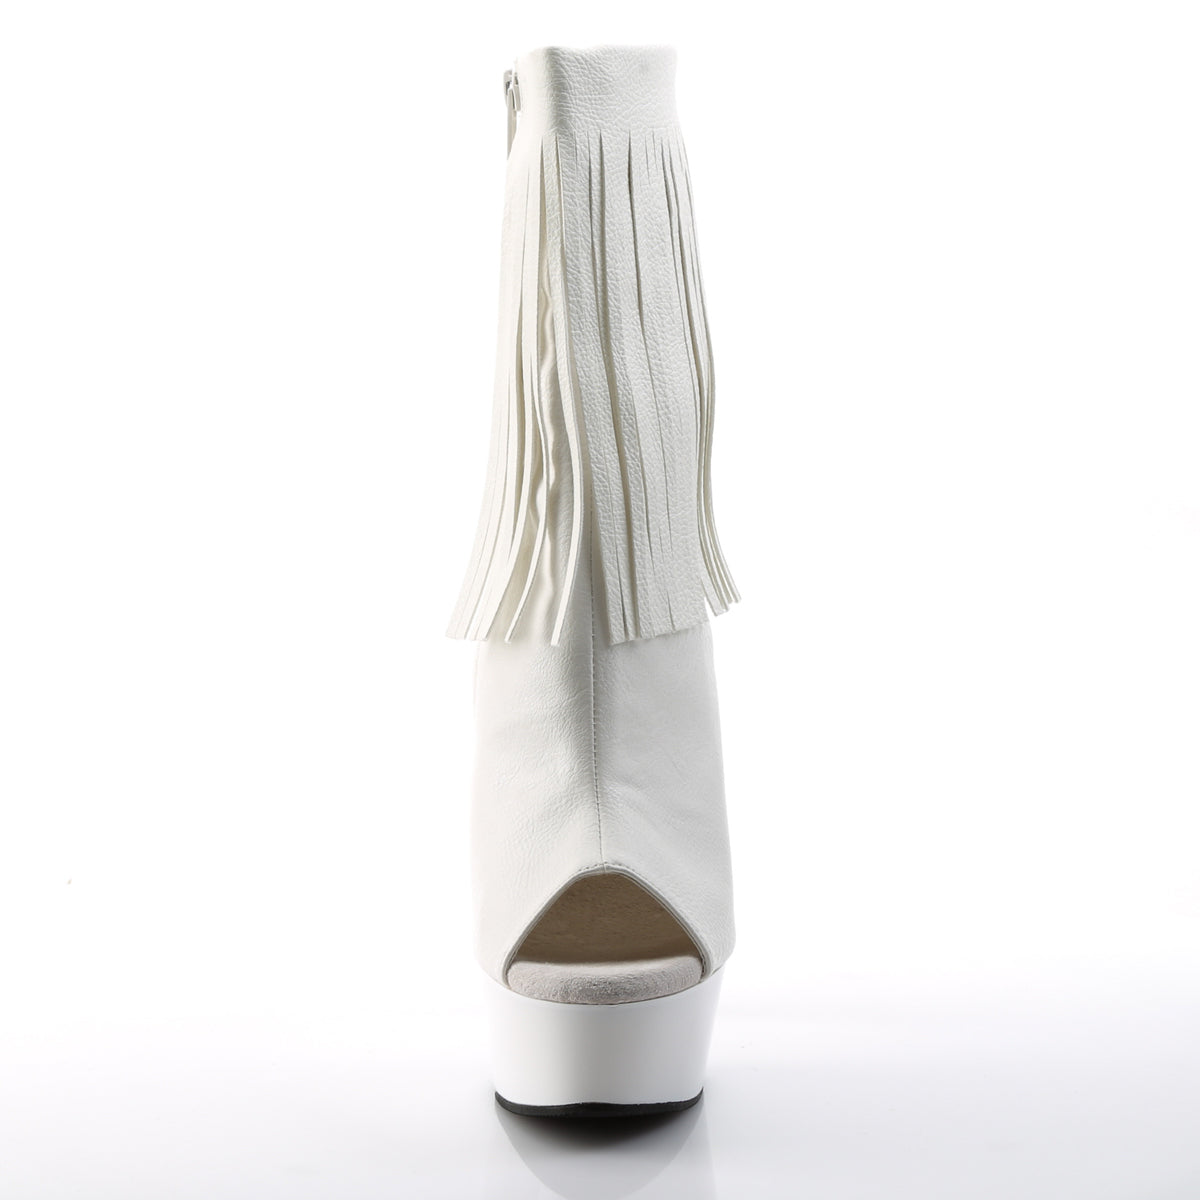 DELIGHT-1019 Pleaser 6 Inch Heel White Pole Dancer Platforms-Pleaser- Sexy Shoes Alternative Footwear